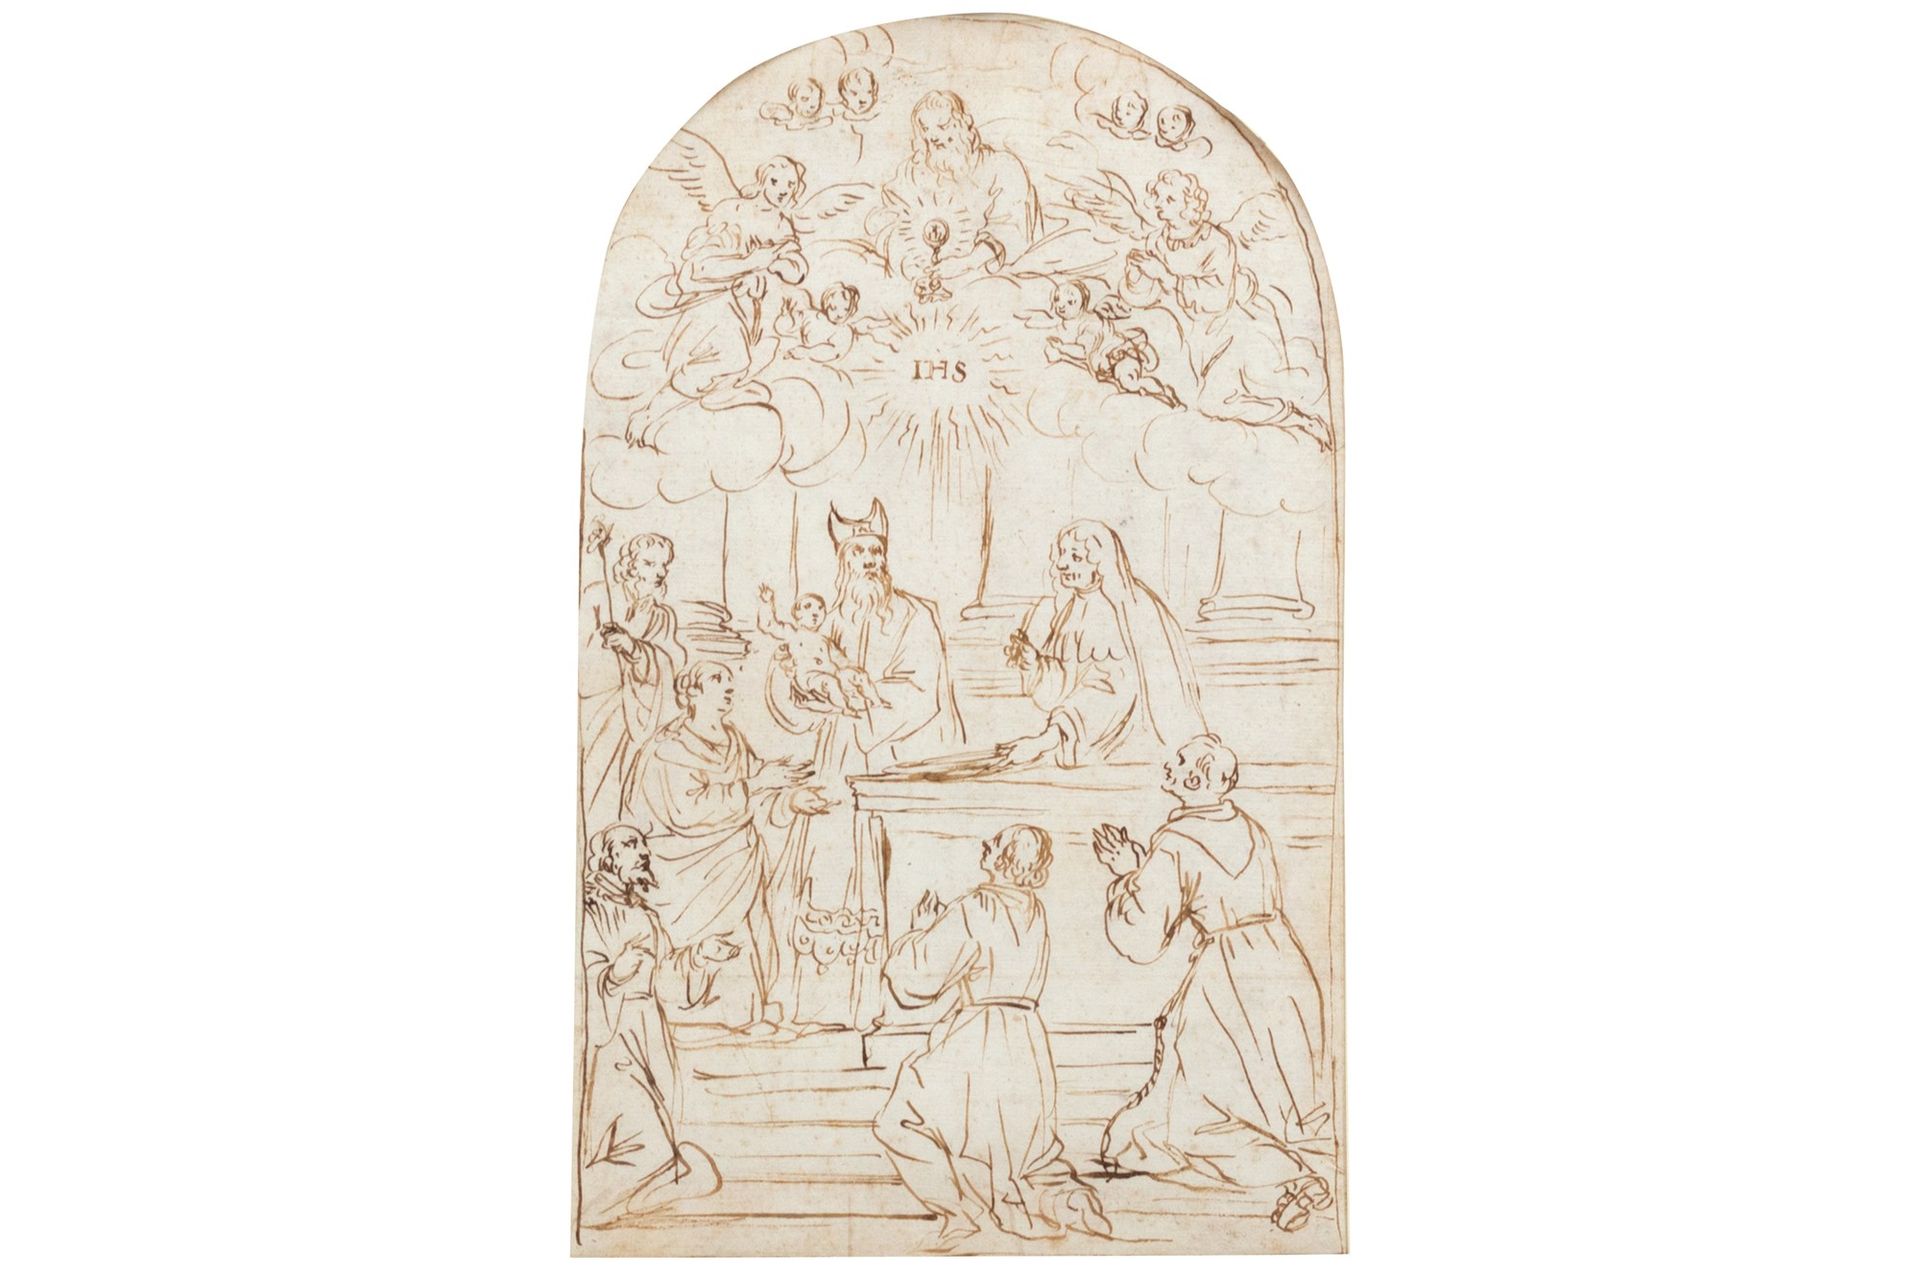 Scuola veneta, secolo XVII Darstellung Jesu im Tempel

Feder und braune Tinte au&hellip;